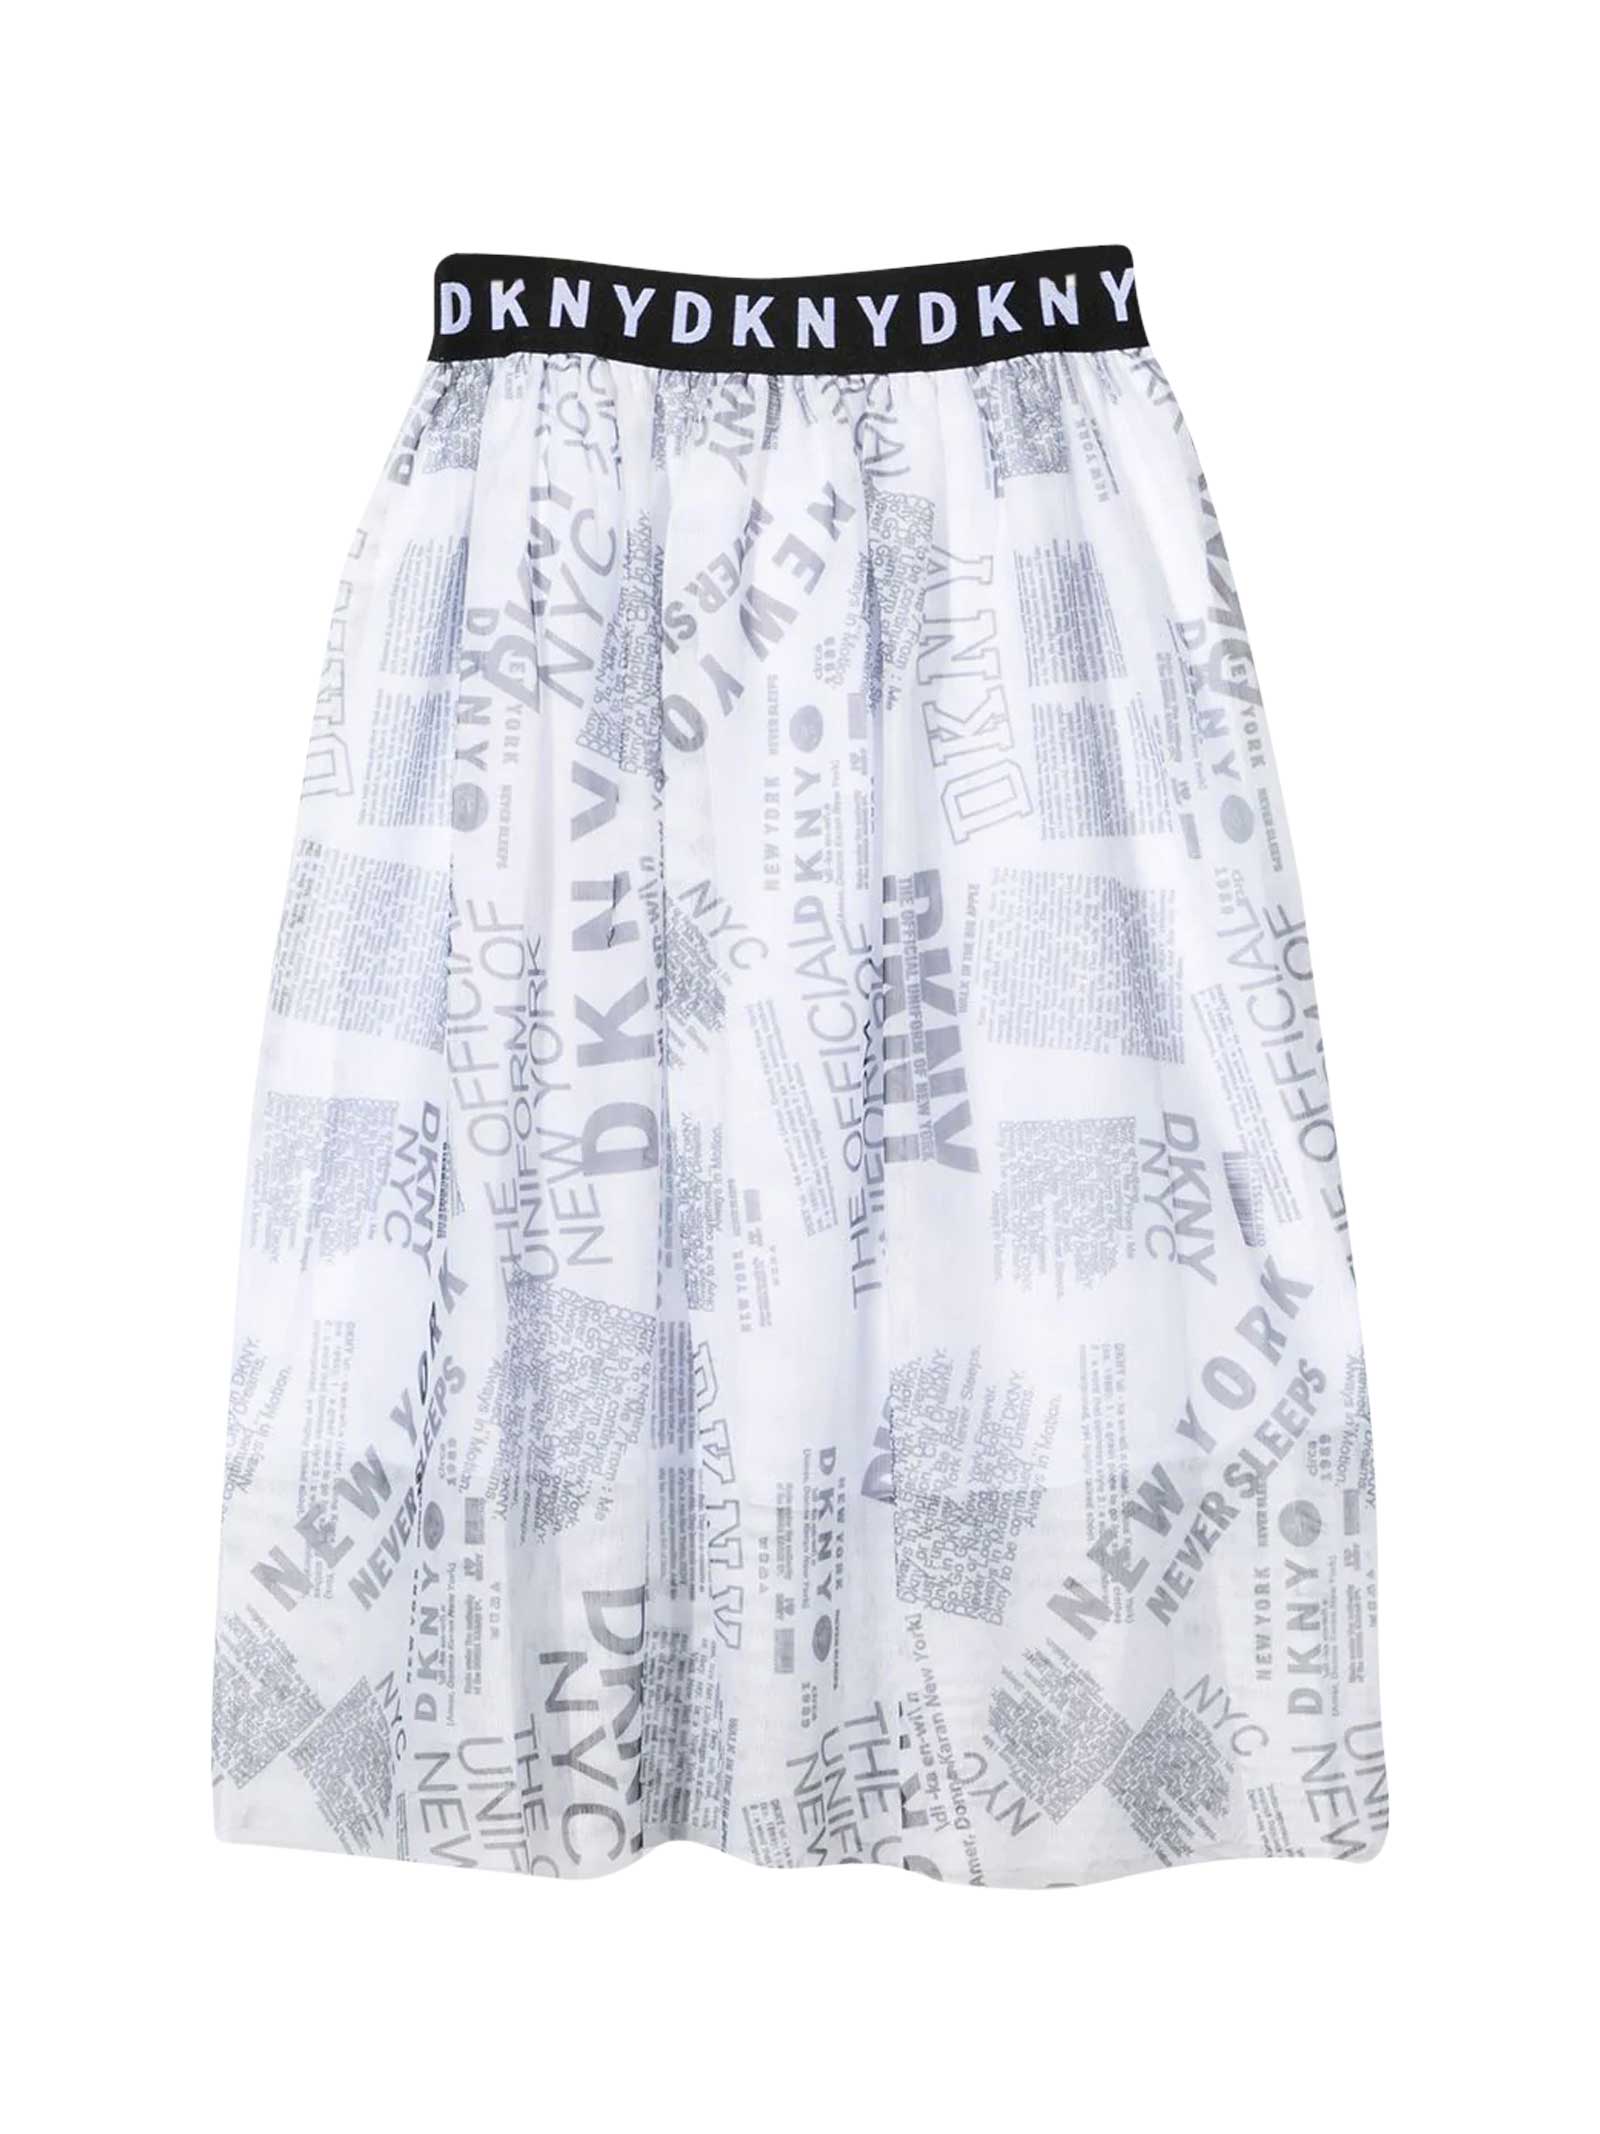 DKNY Skirt With Press